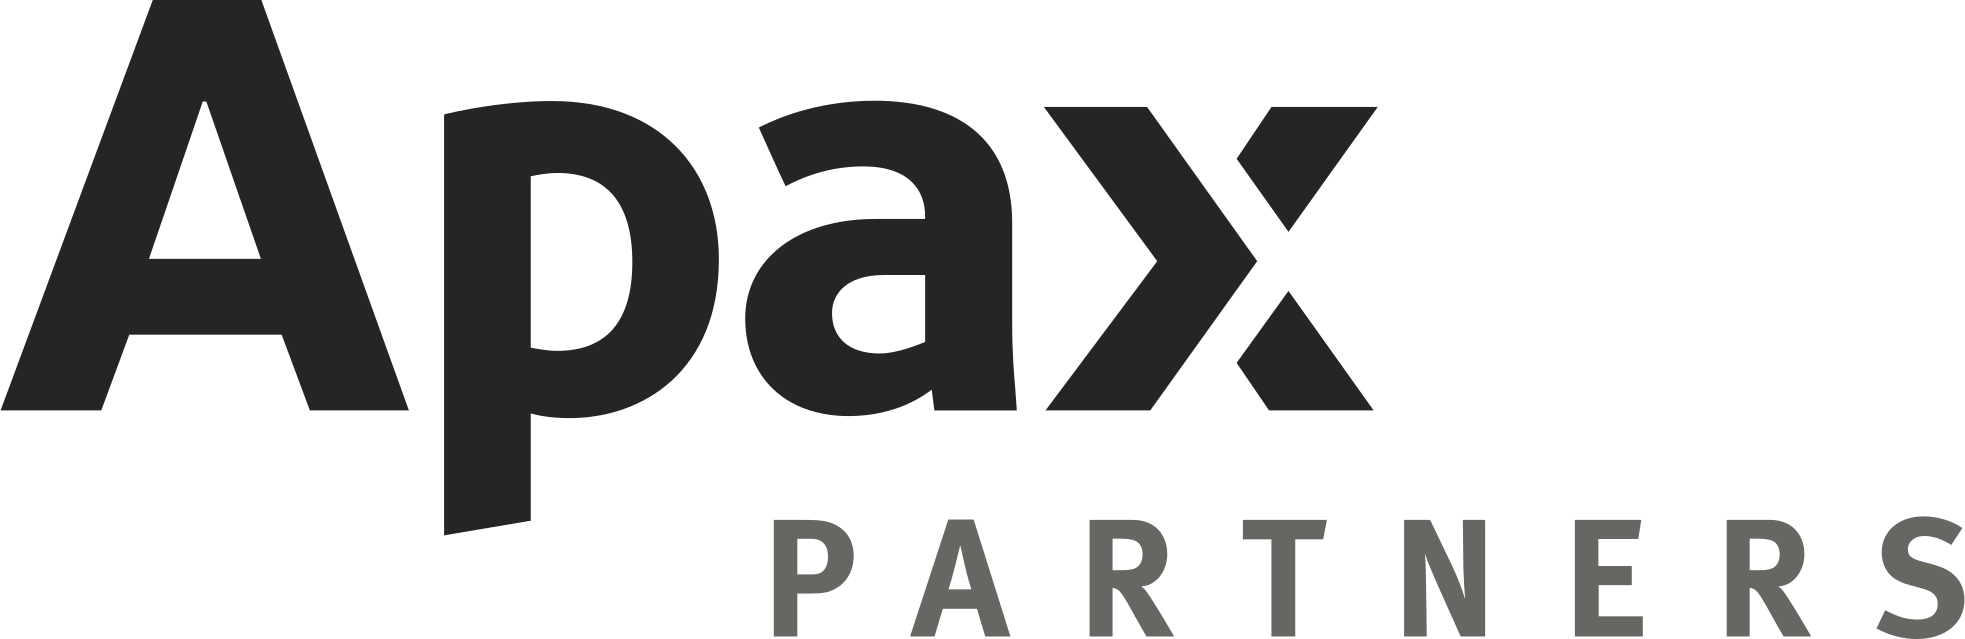 Apax_logo.svg